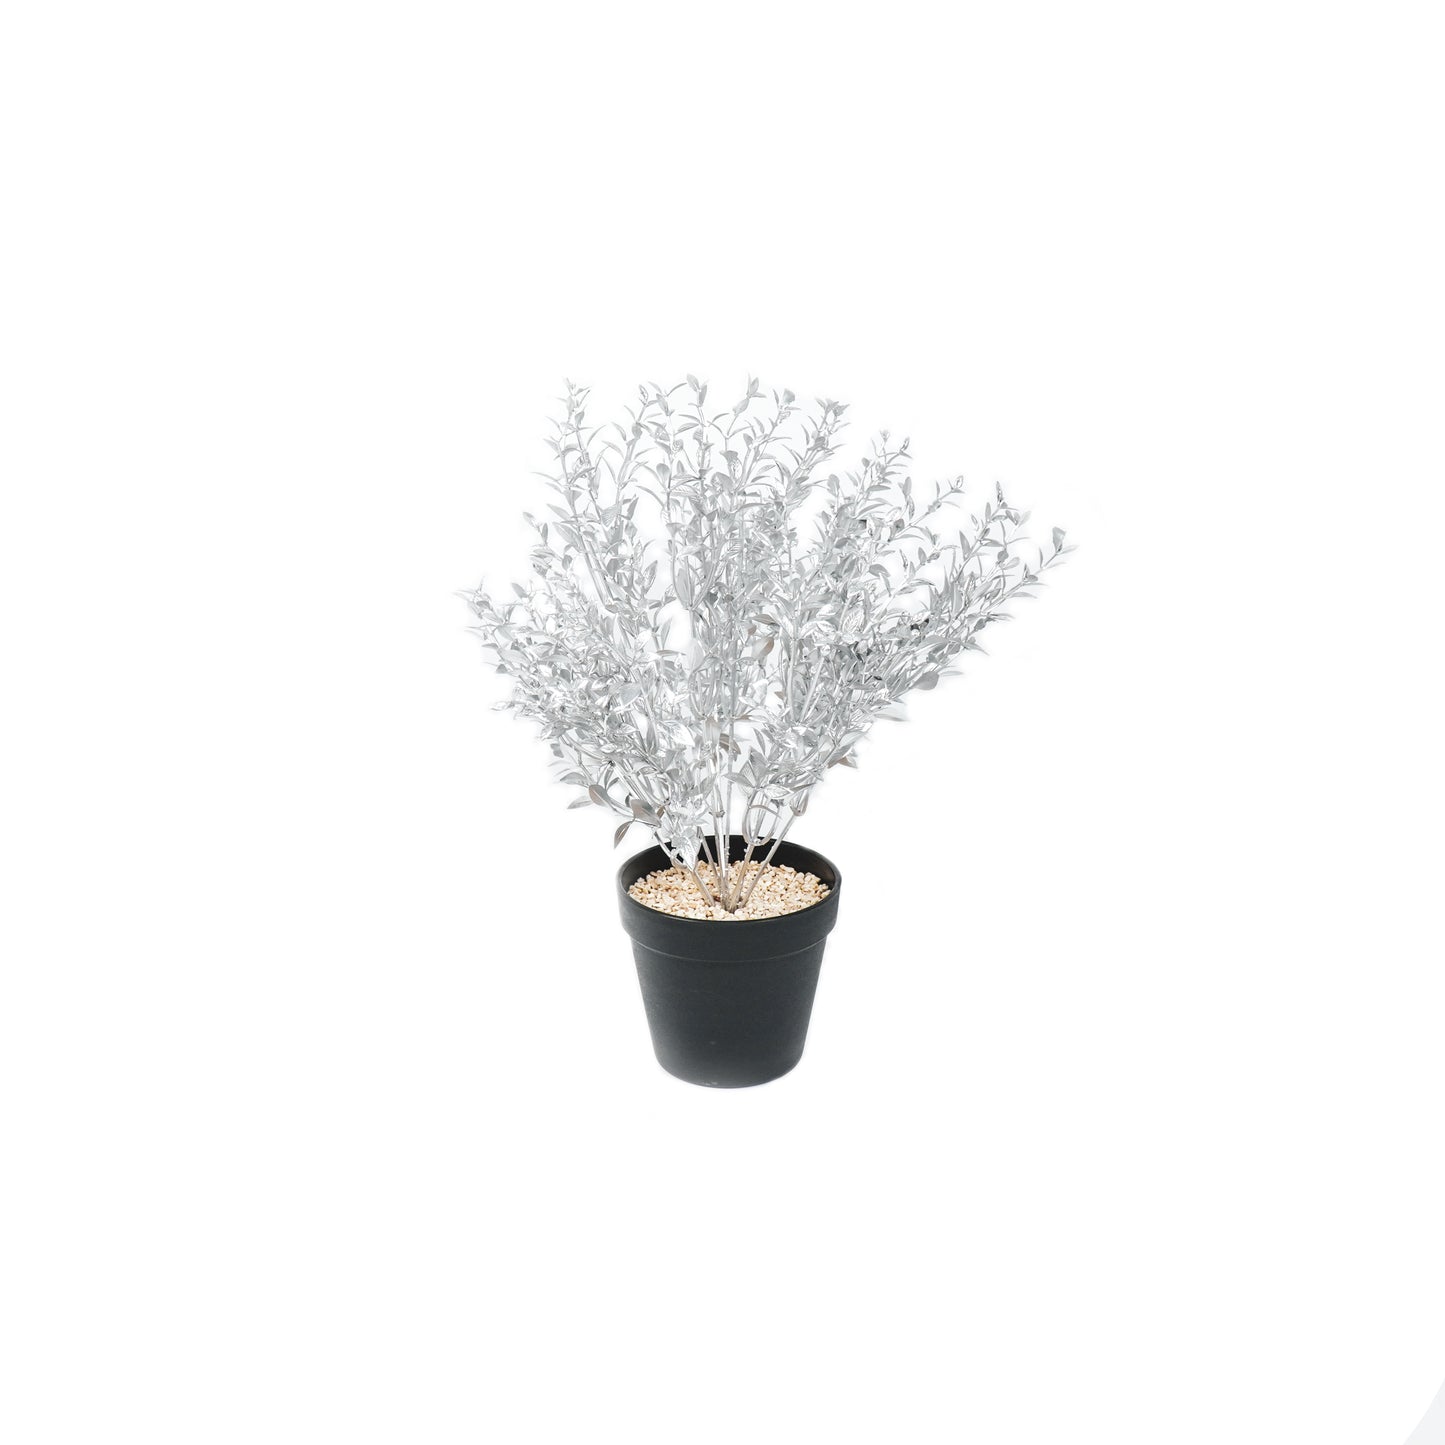 HV Plant with black pot Polysterene - Silver - 15x30x45cm